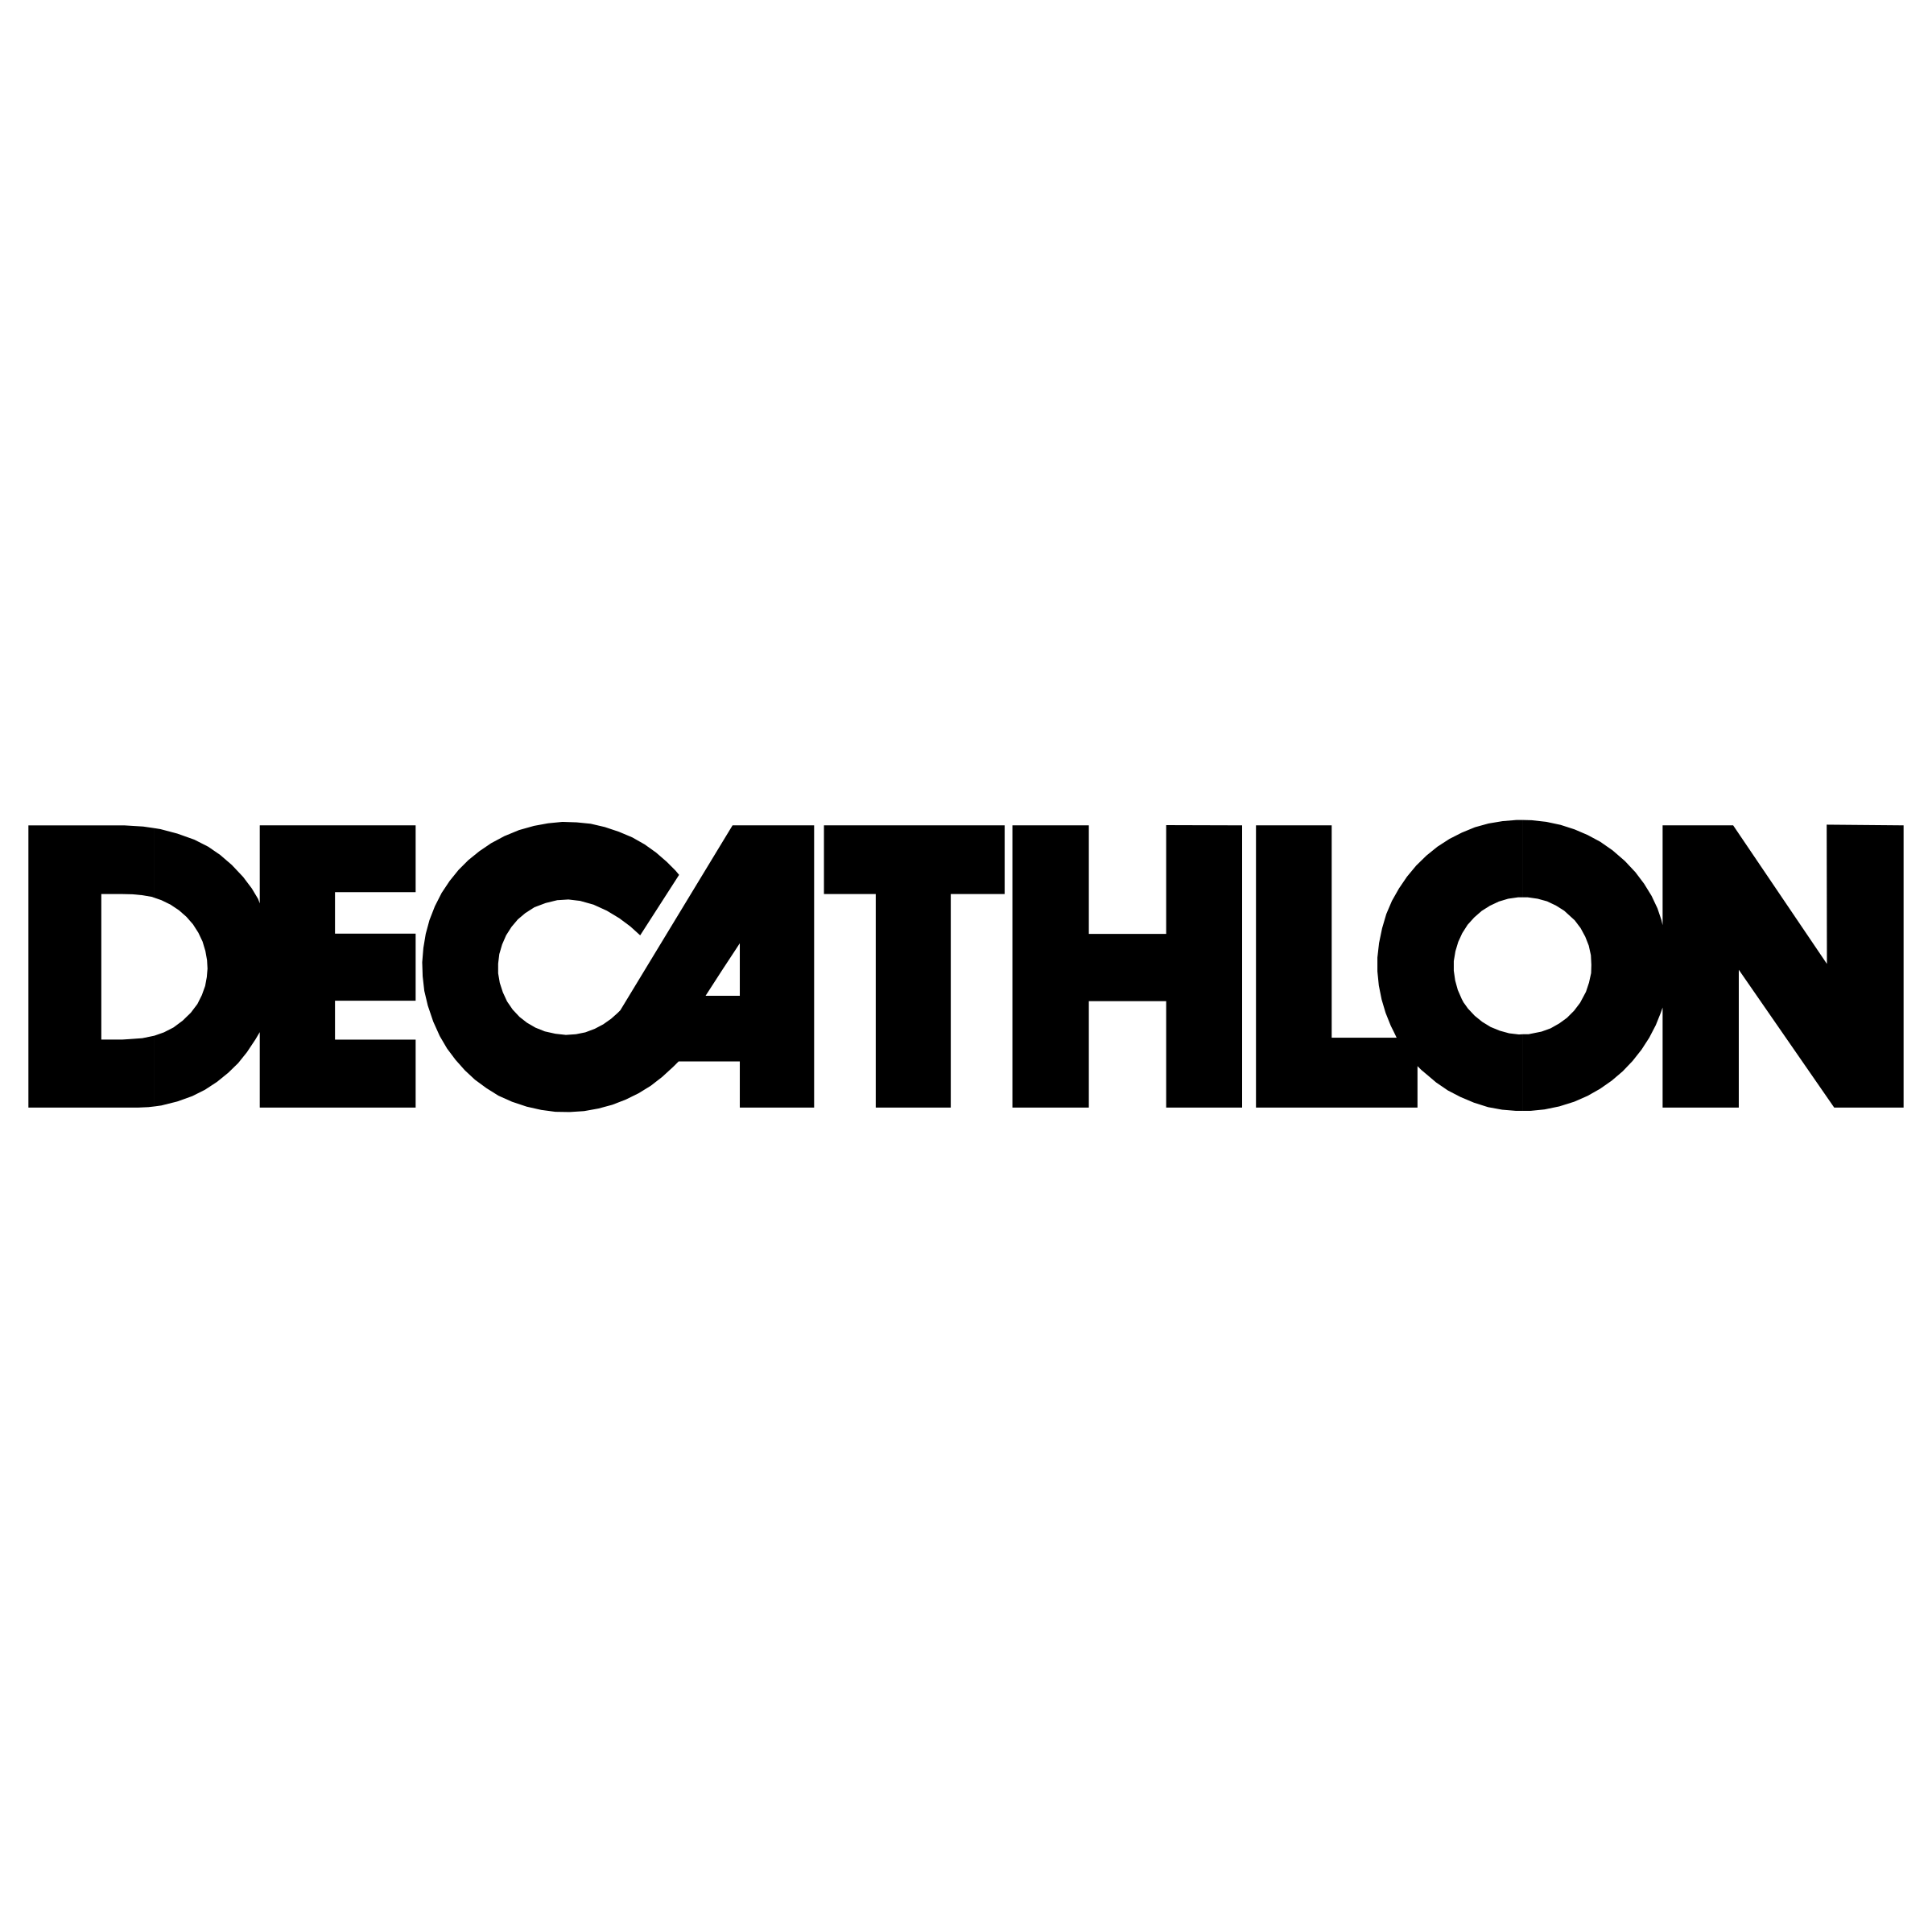 Artengo Logo Decathlon Group 